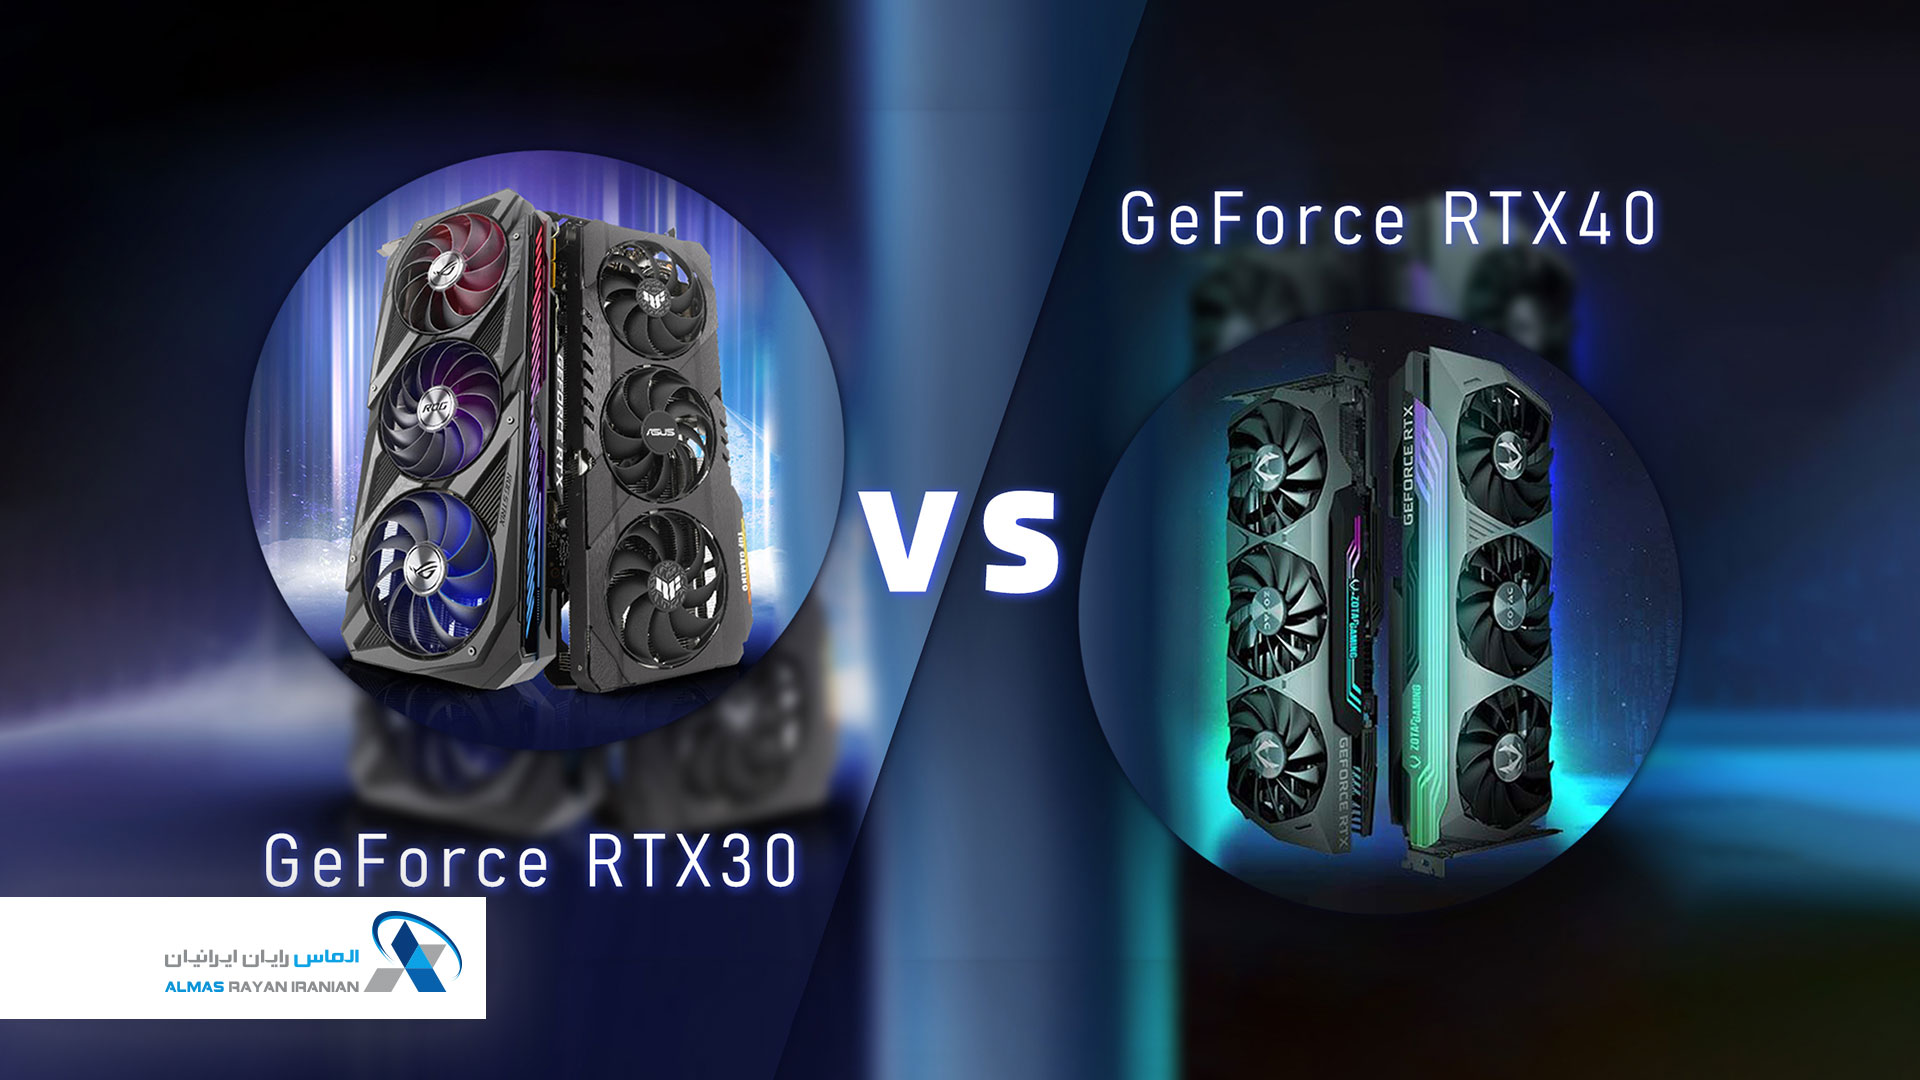 Geforce-RTX40 and GeForce RTX30